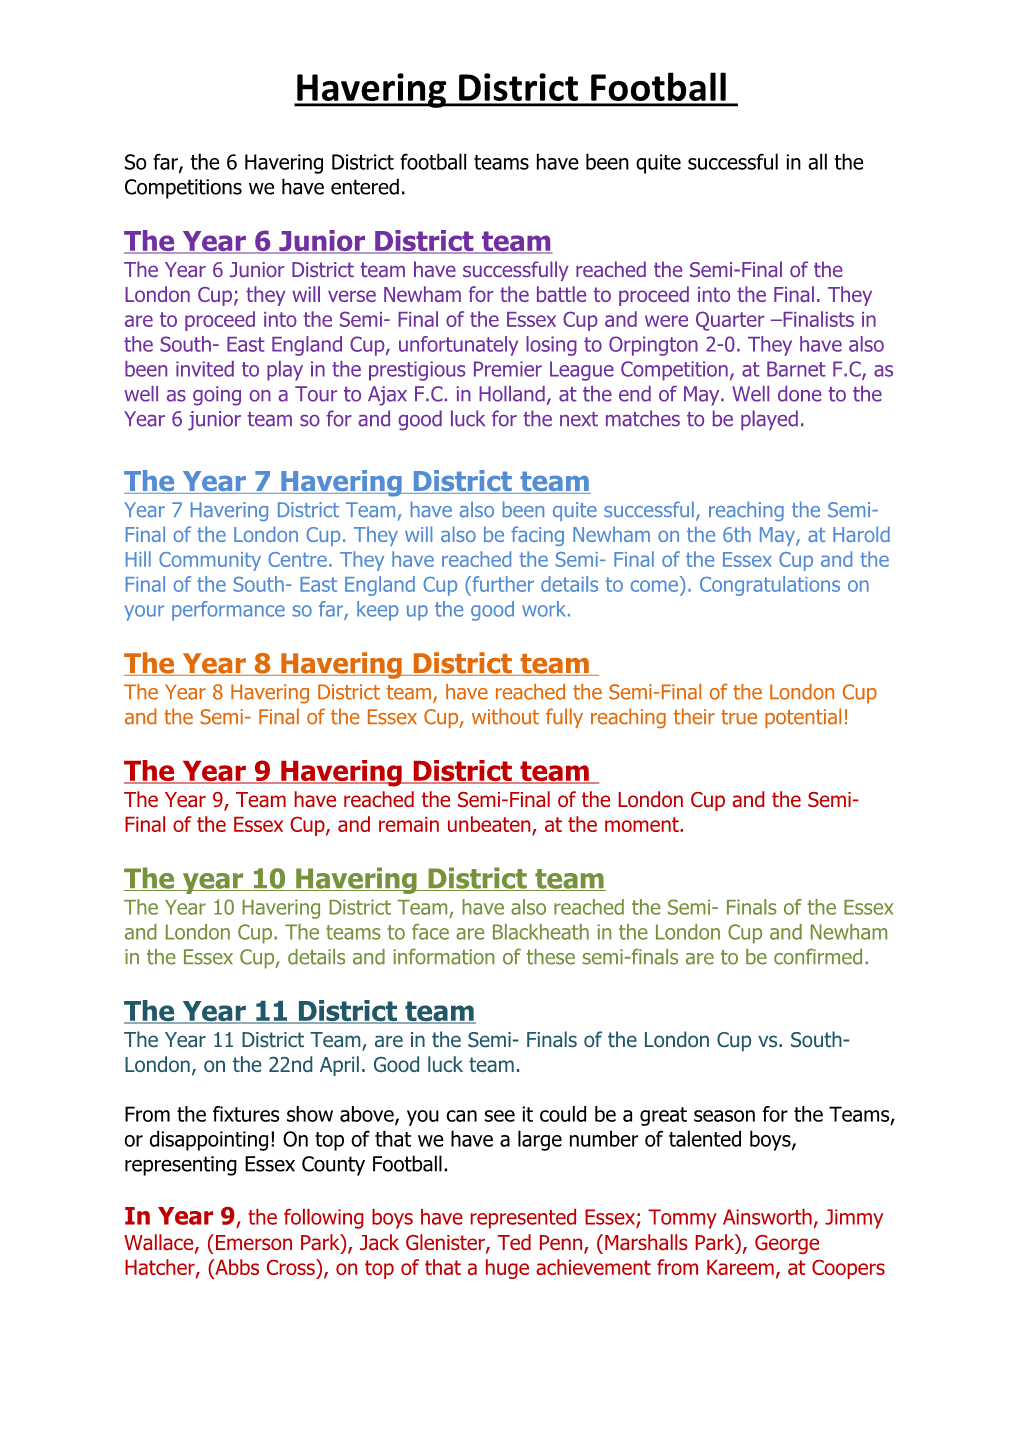 The Year 6 Junior District Team